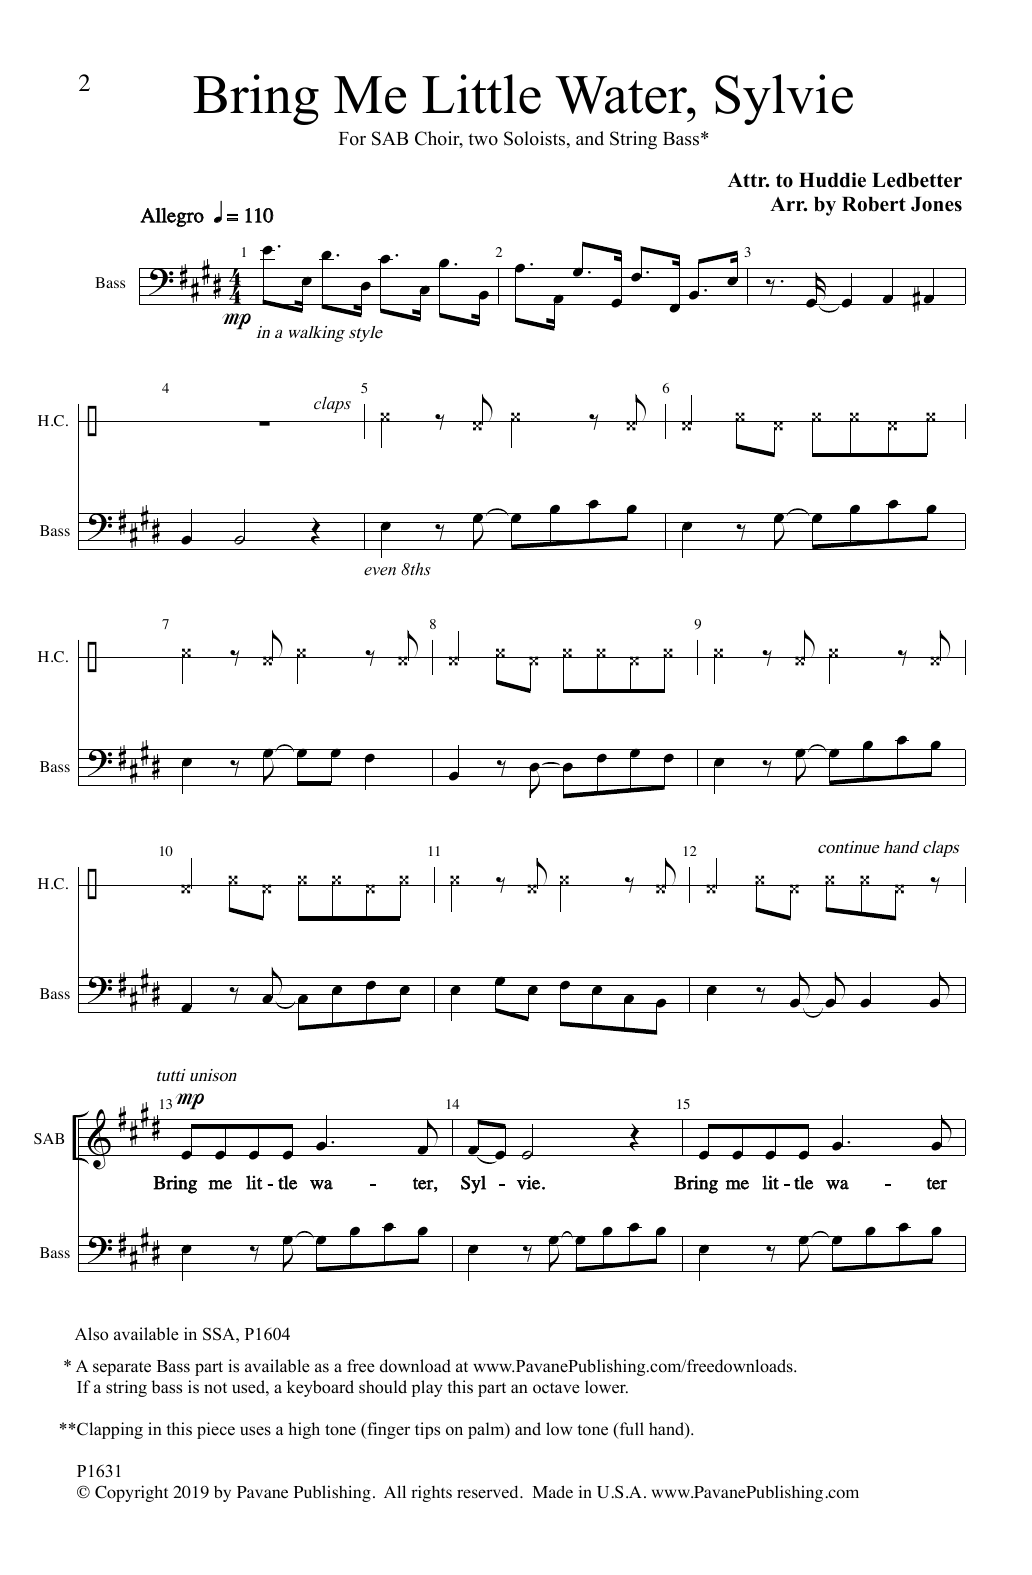 Huddie Ledbetter Bring Me Little Water, Sylvie (arr. Robert Jones) Sheet Music Notes & Chords for SAB Choir - Download or Print PDF